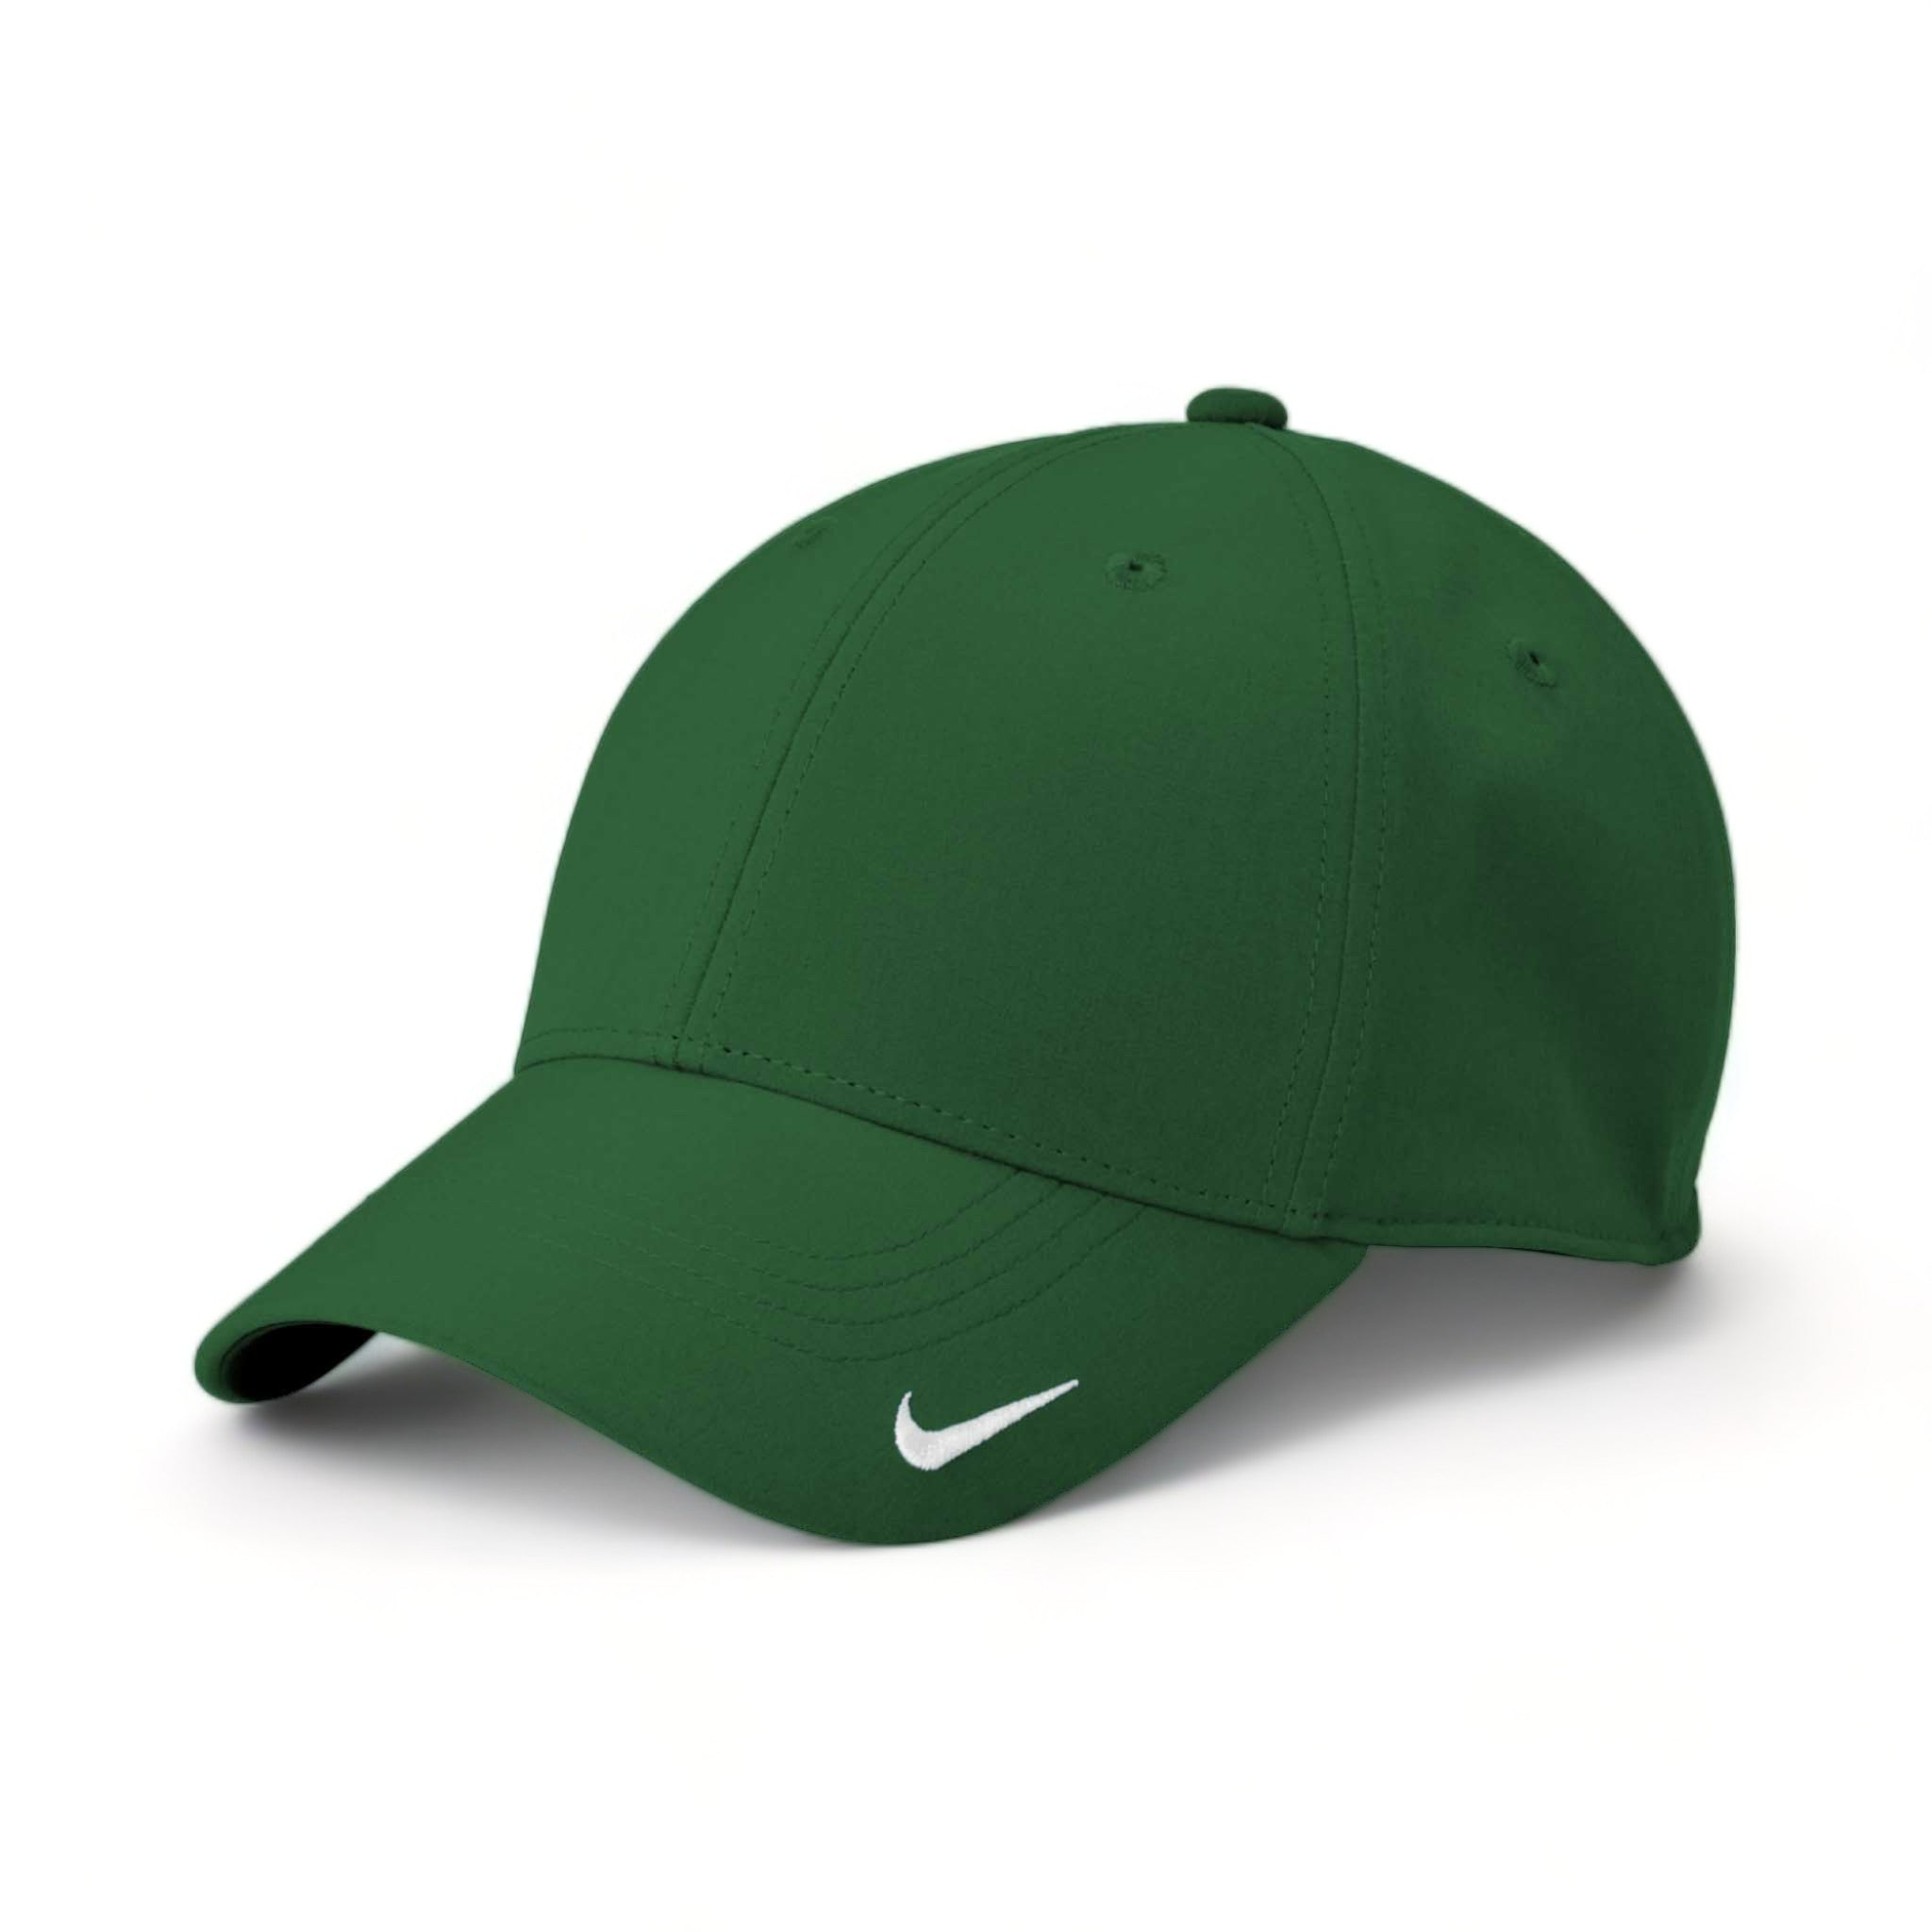 Side view of Nike NKFB6447 custom hat in gorge green